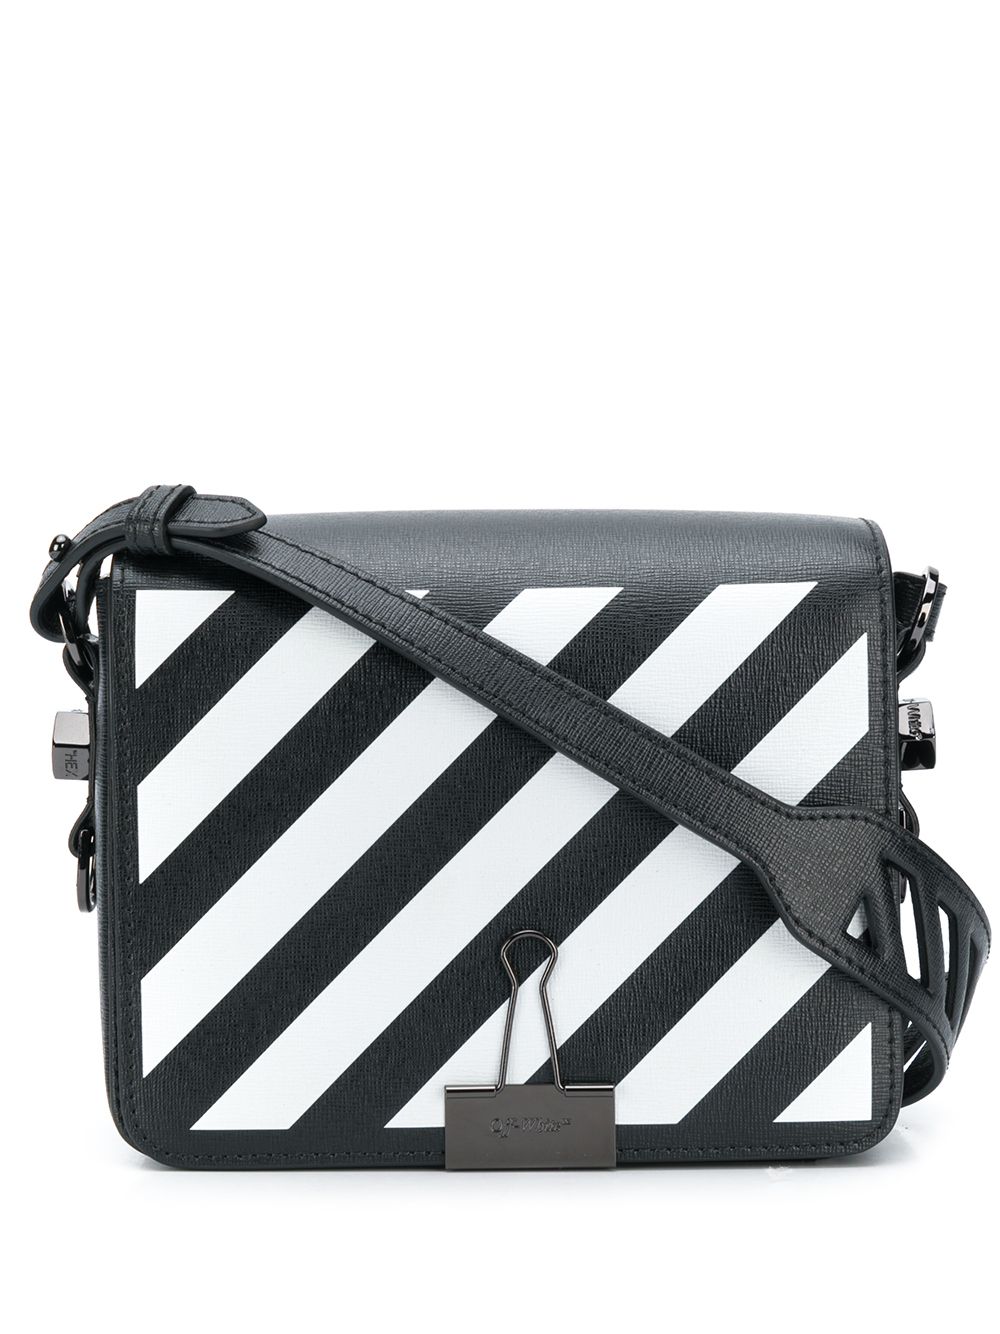 Off-White Black Diagonal Print Leather Binder Clip Crossbody Bag